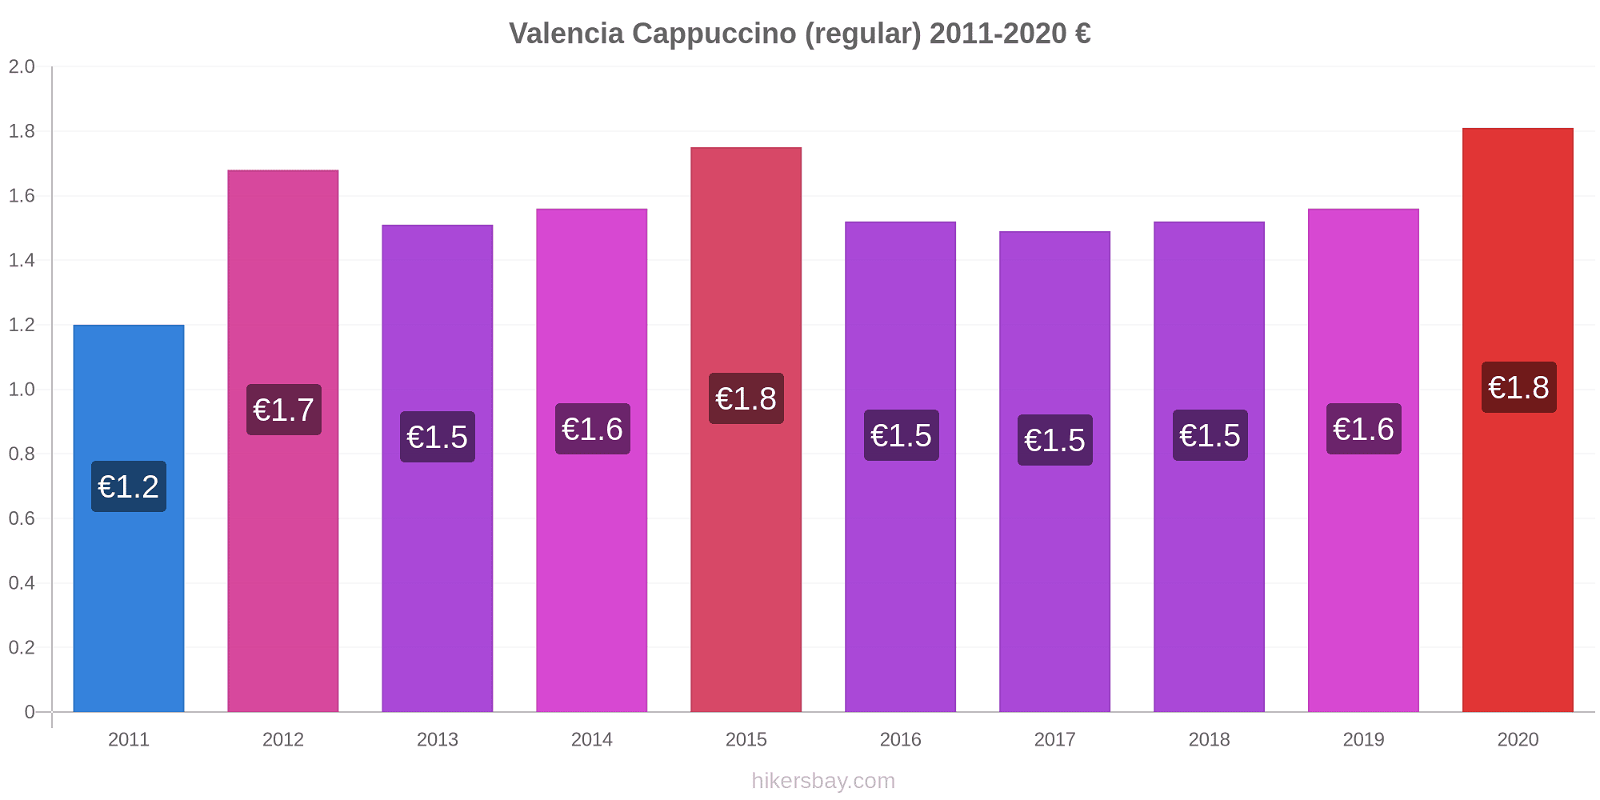 Valencia price changes Cappuccino (regular) hikersbay.com